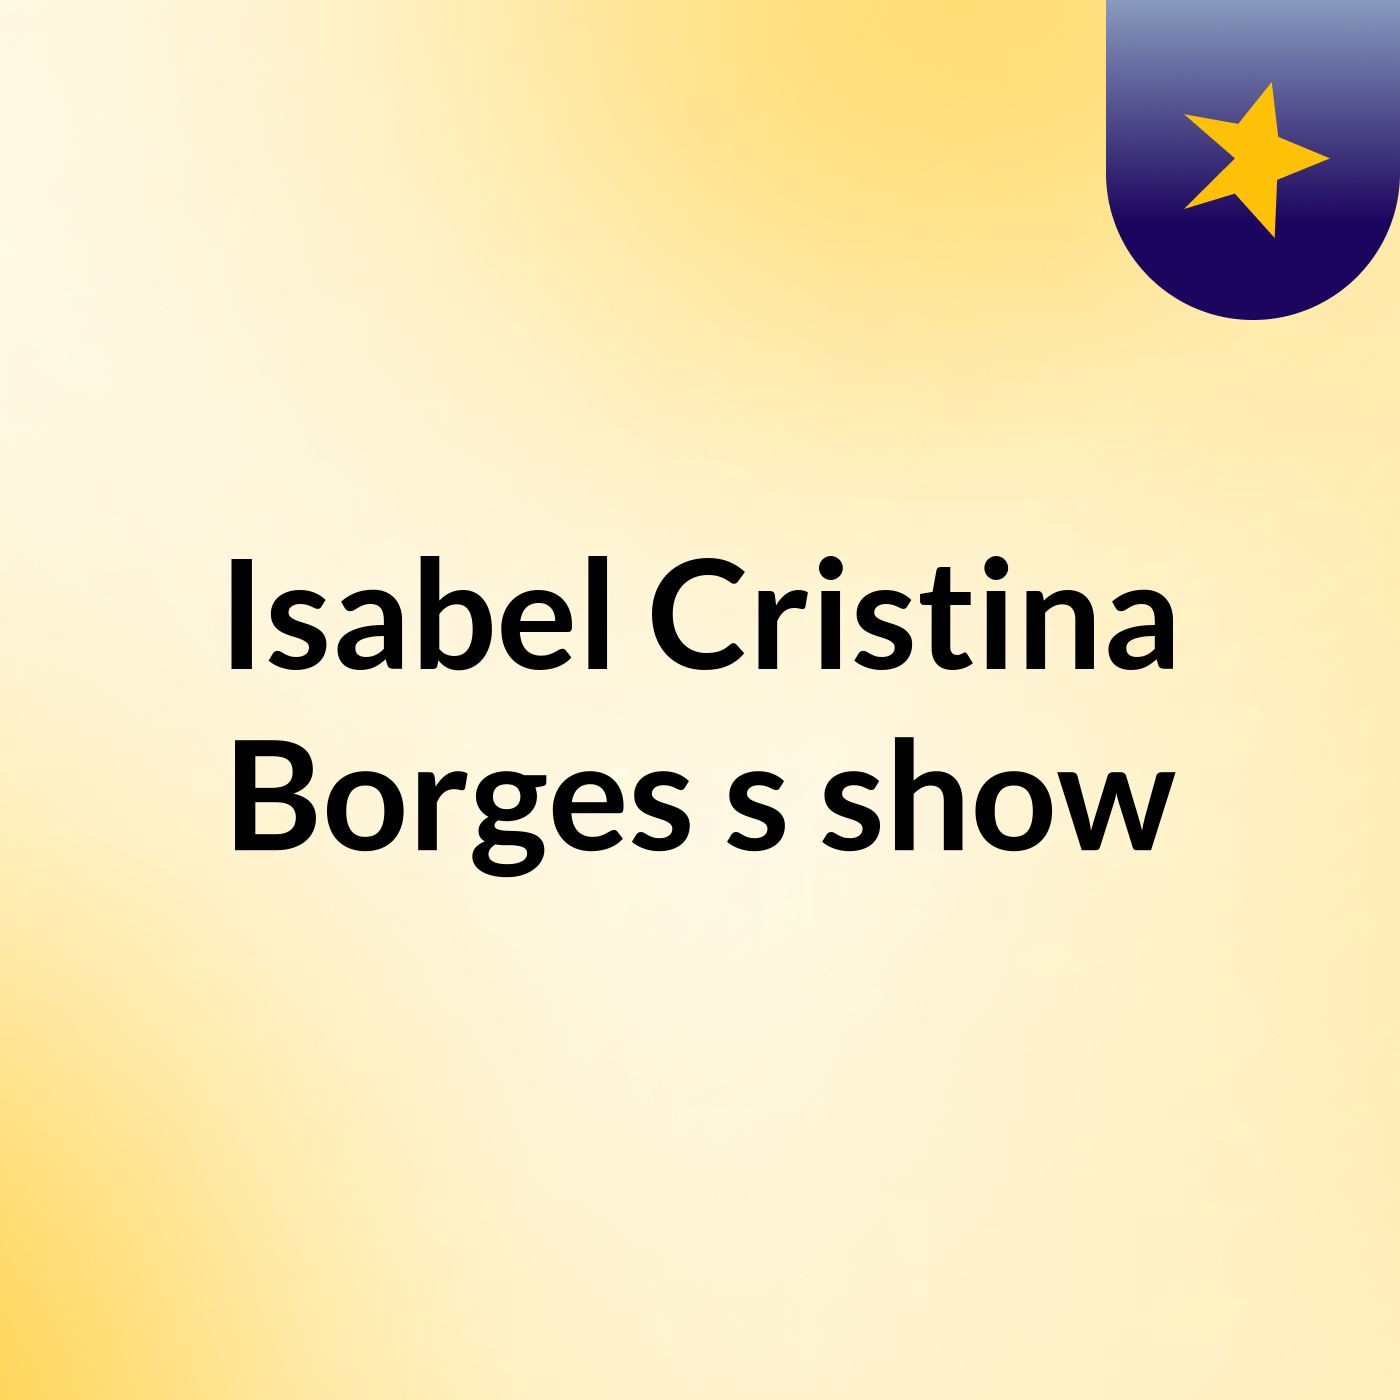 Isabel Cristina Borges's show